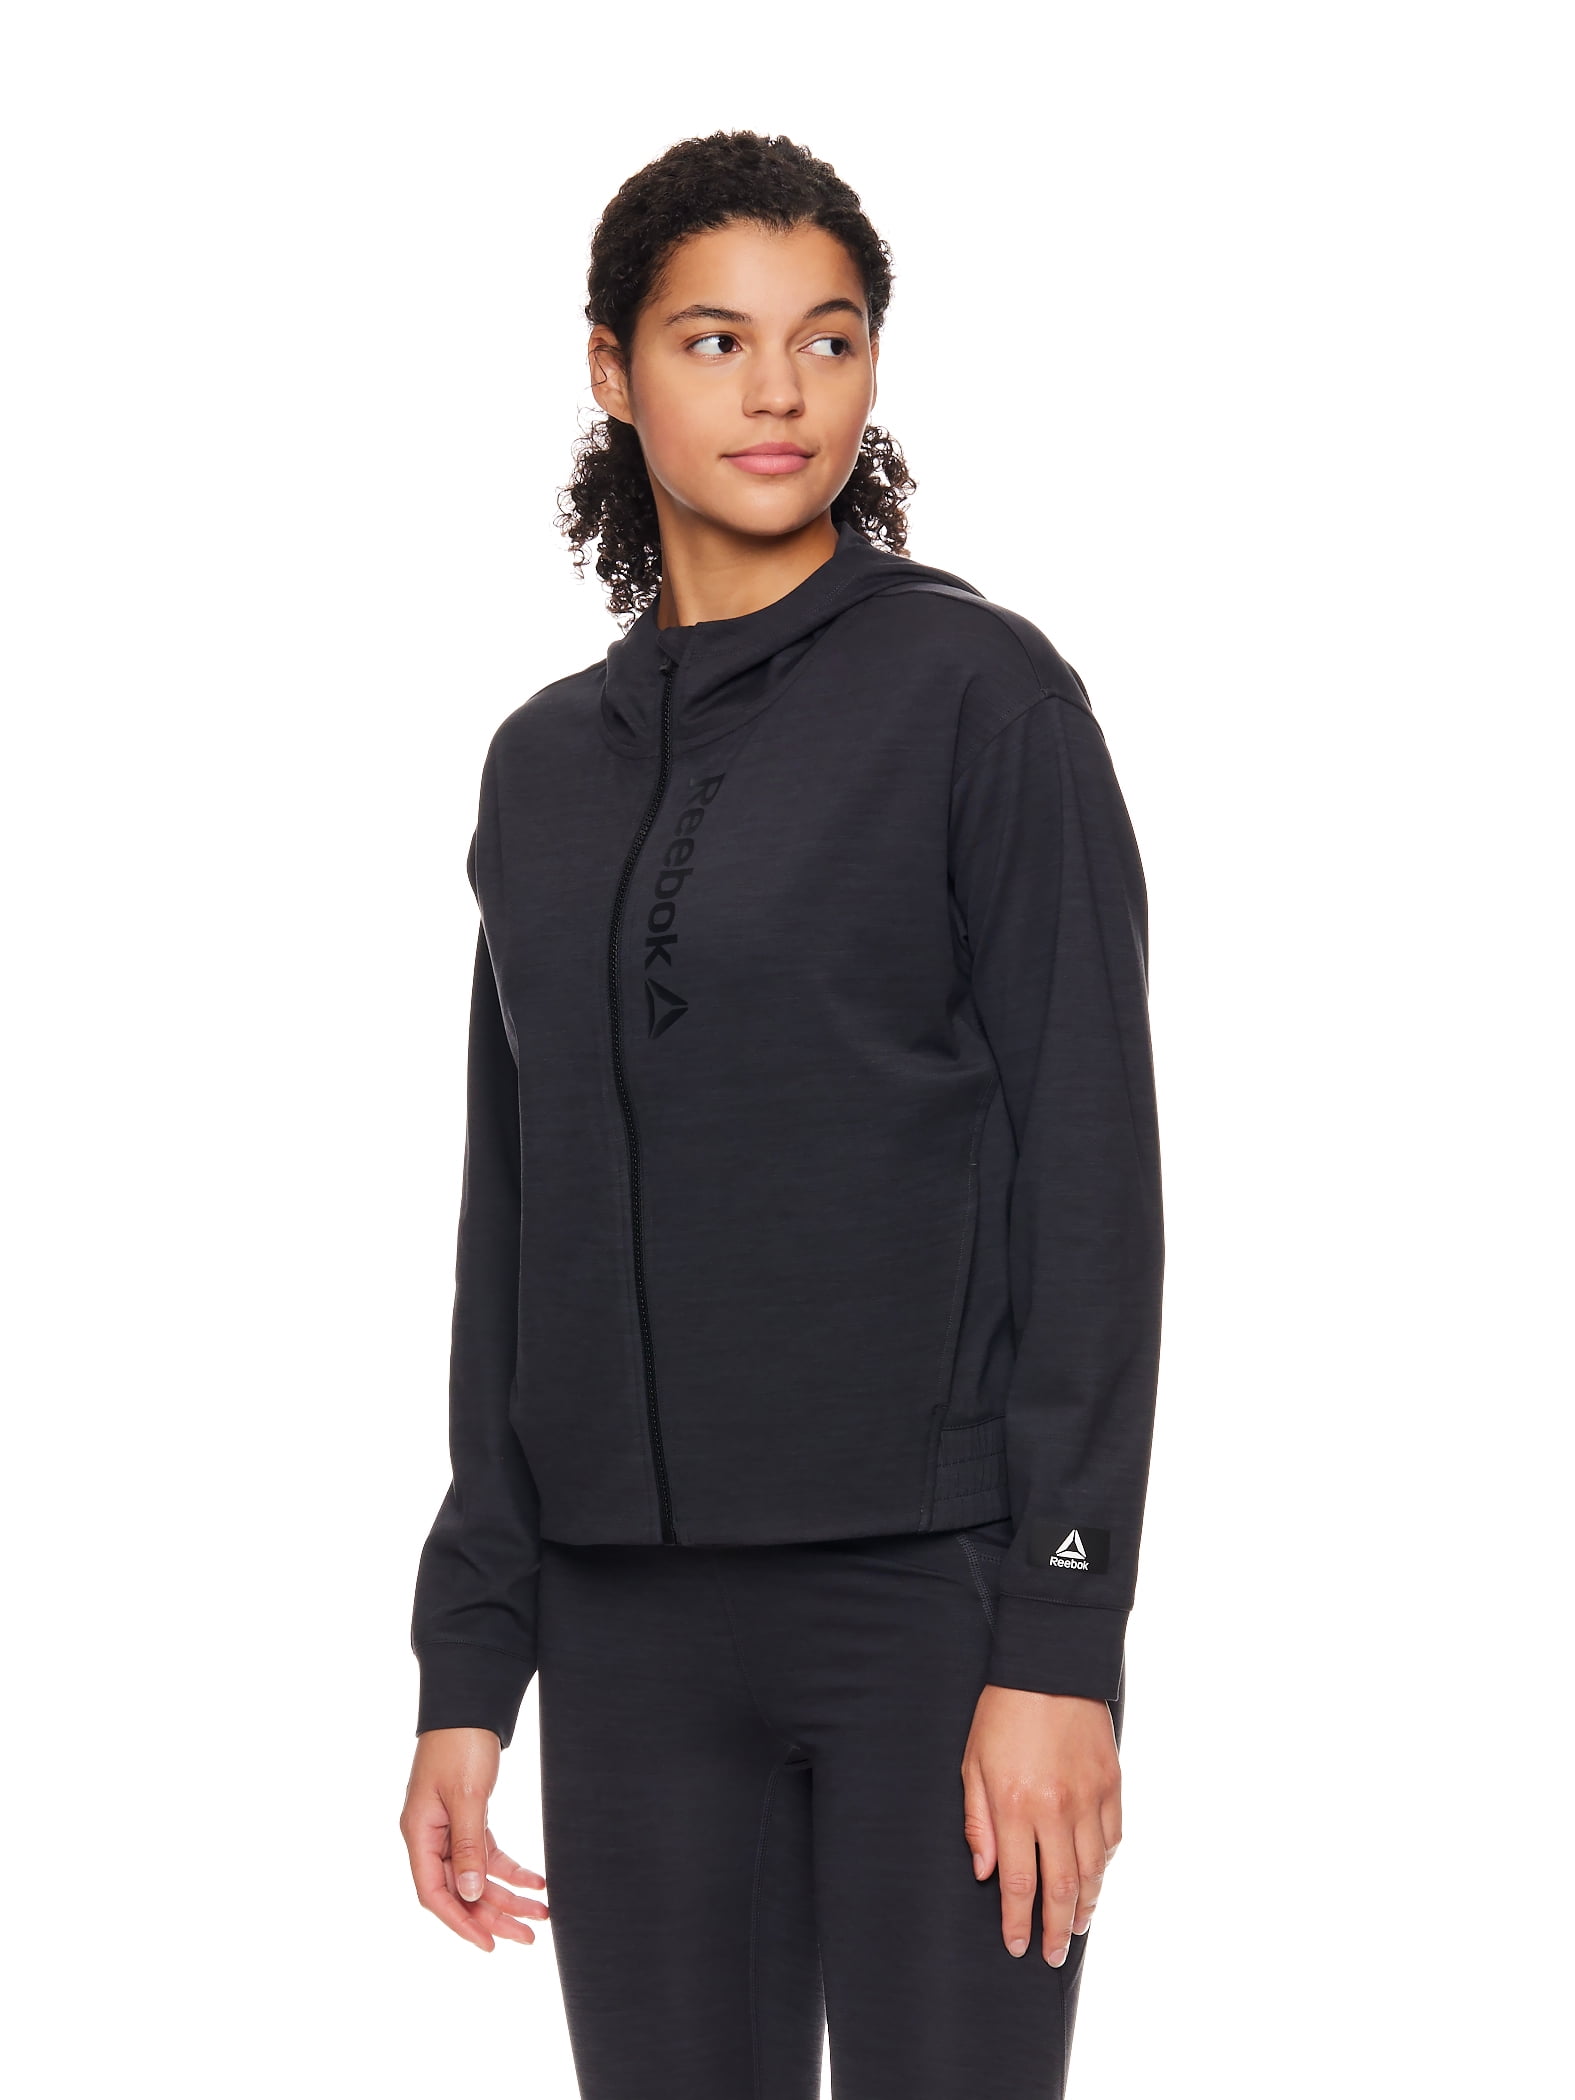 Reebok Women's Flex Cropped Peformance Jacket With Front Pockets